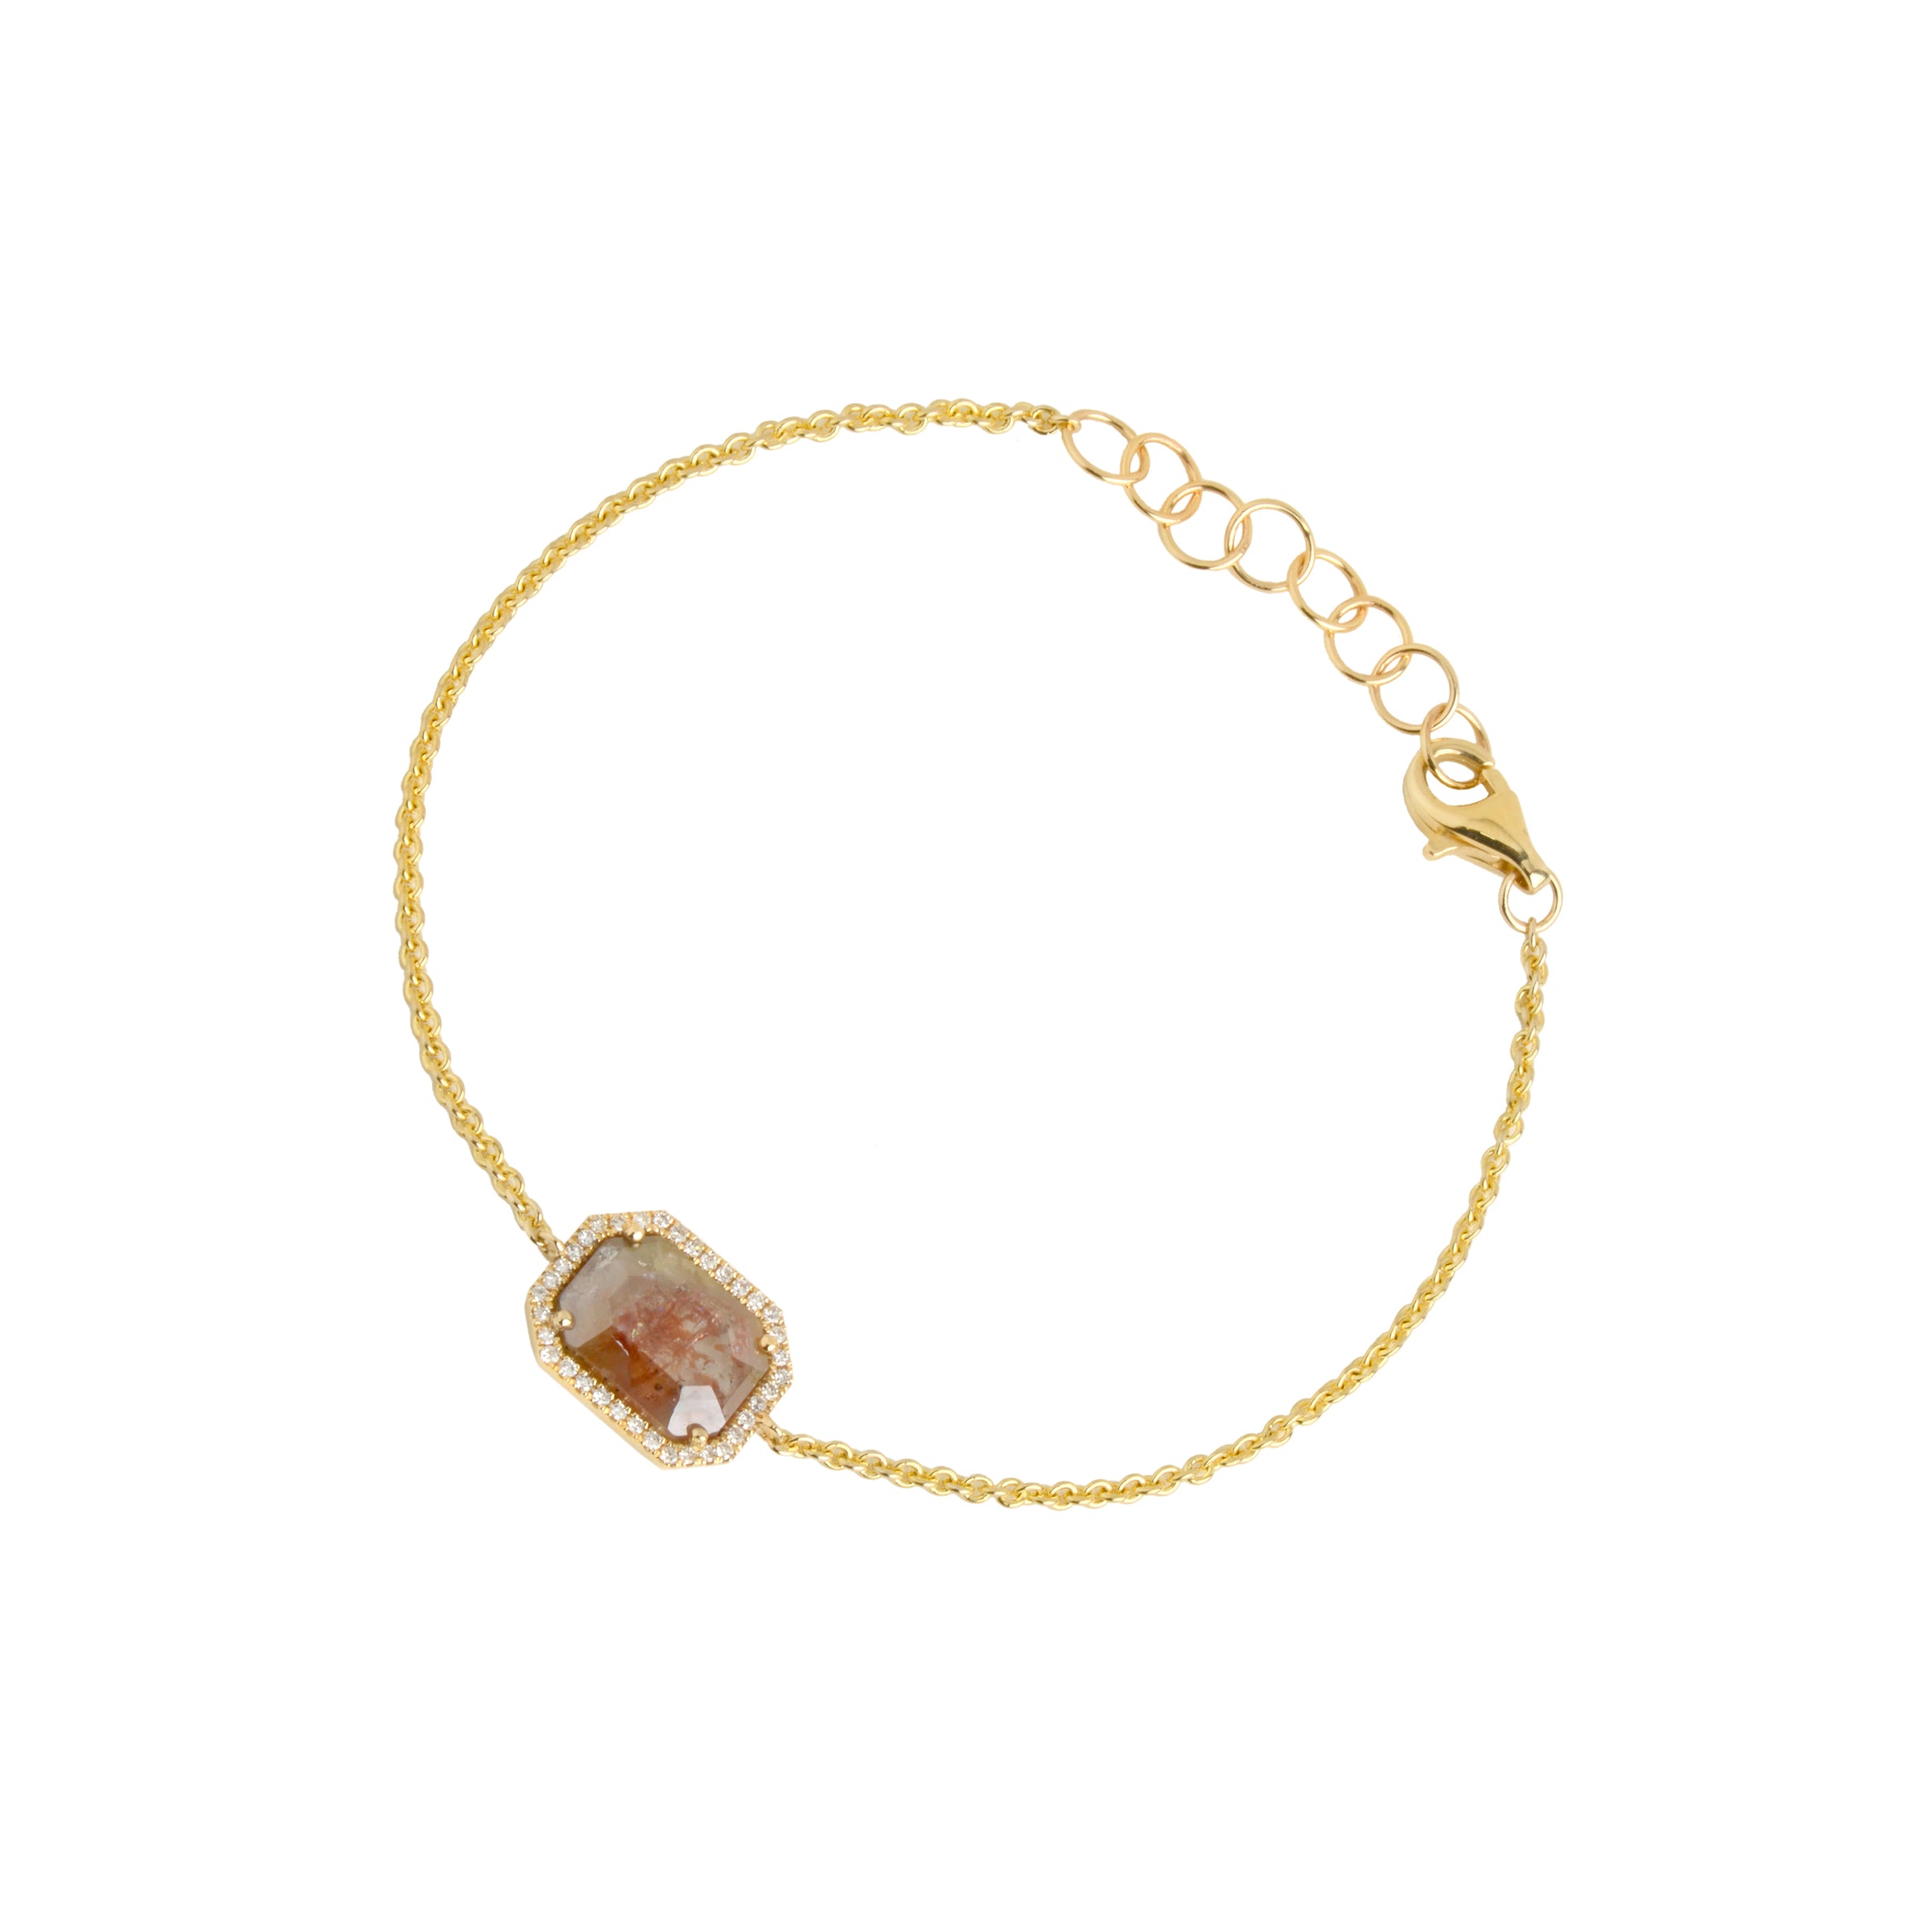 RECTANGULAR SLICED DIAMOND BRACELET - Bridget King Jewelry